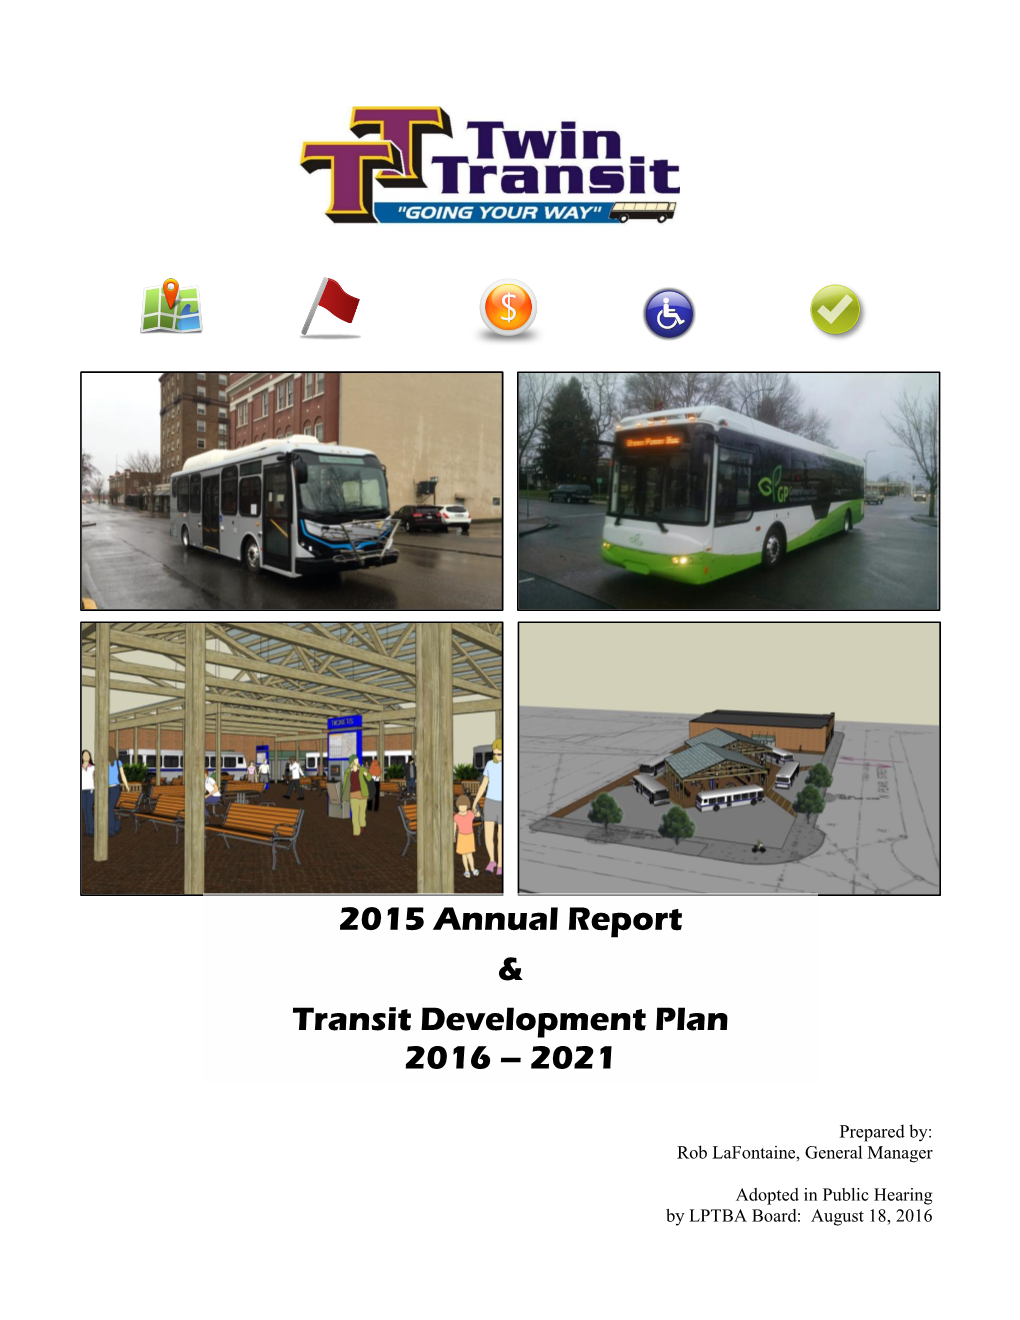 Transit Development Plan 2005 – 2010